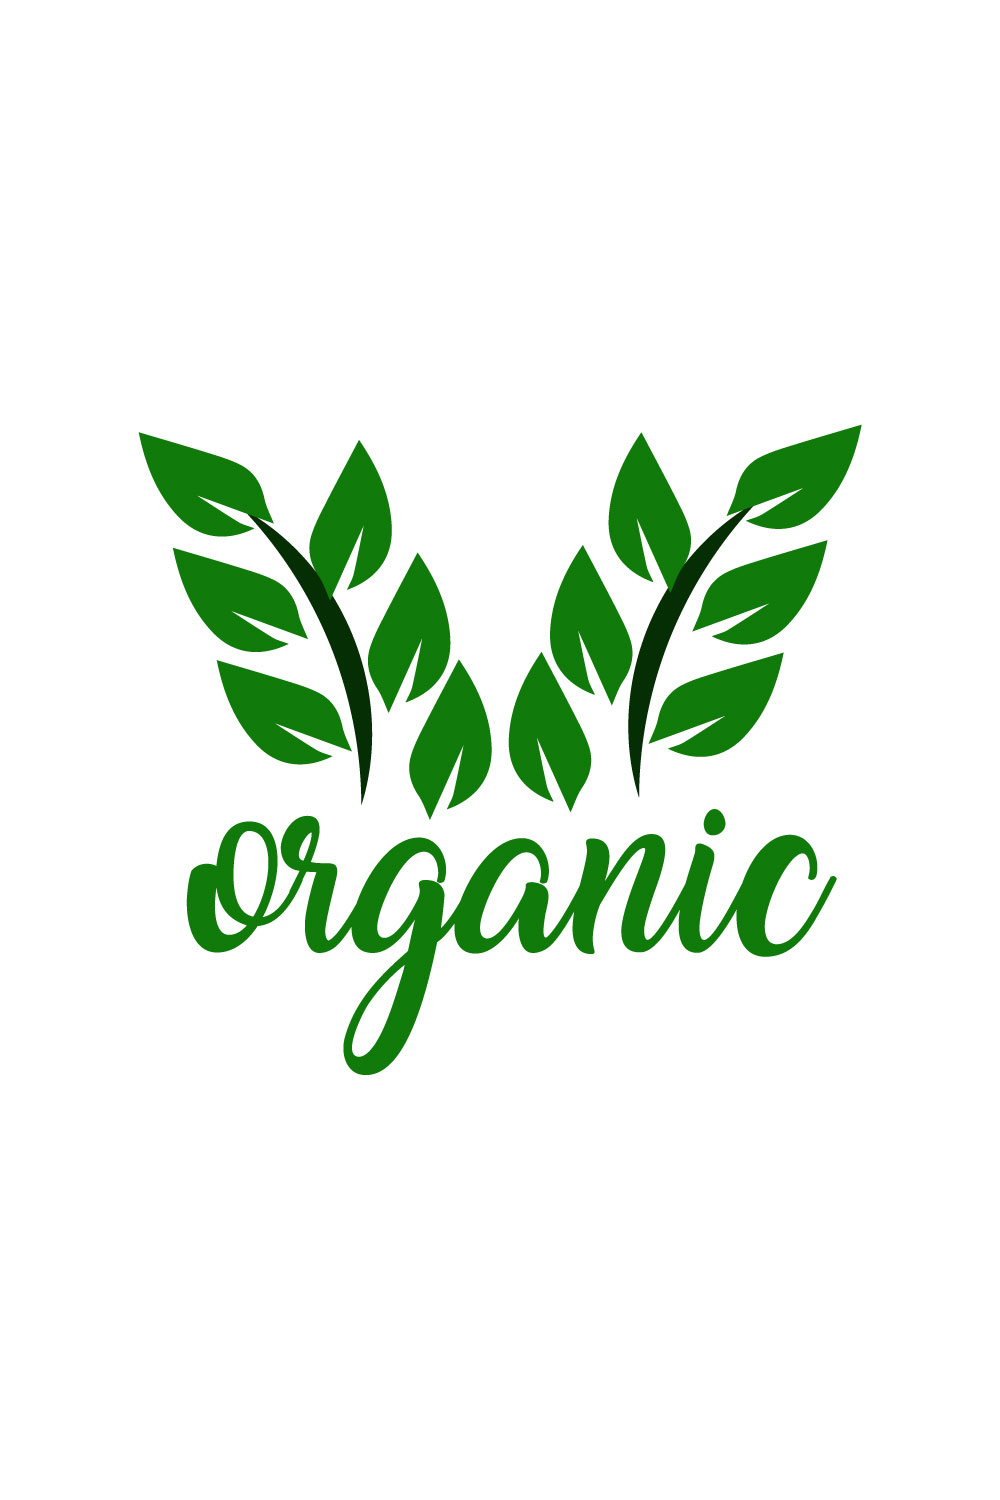 Free Biodiversity organic logo pinterest preview image.